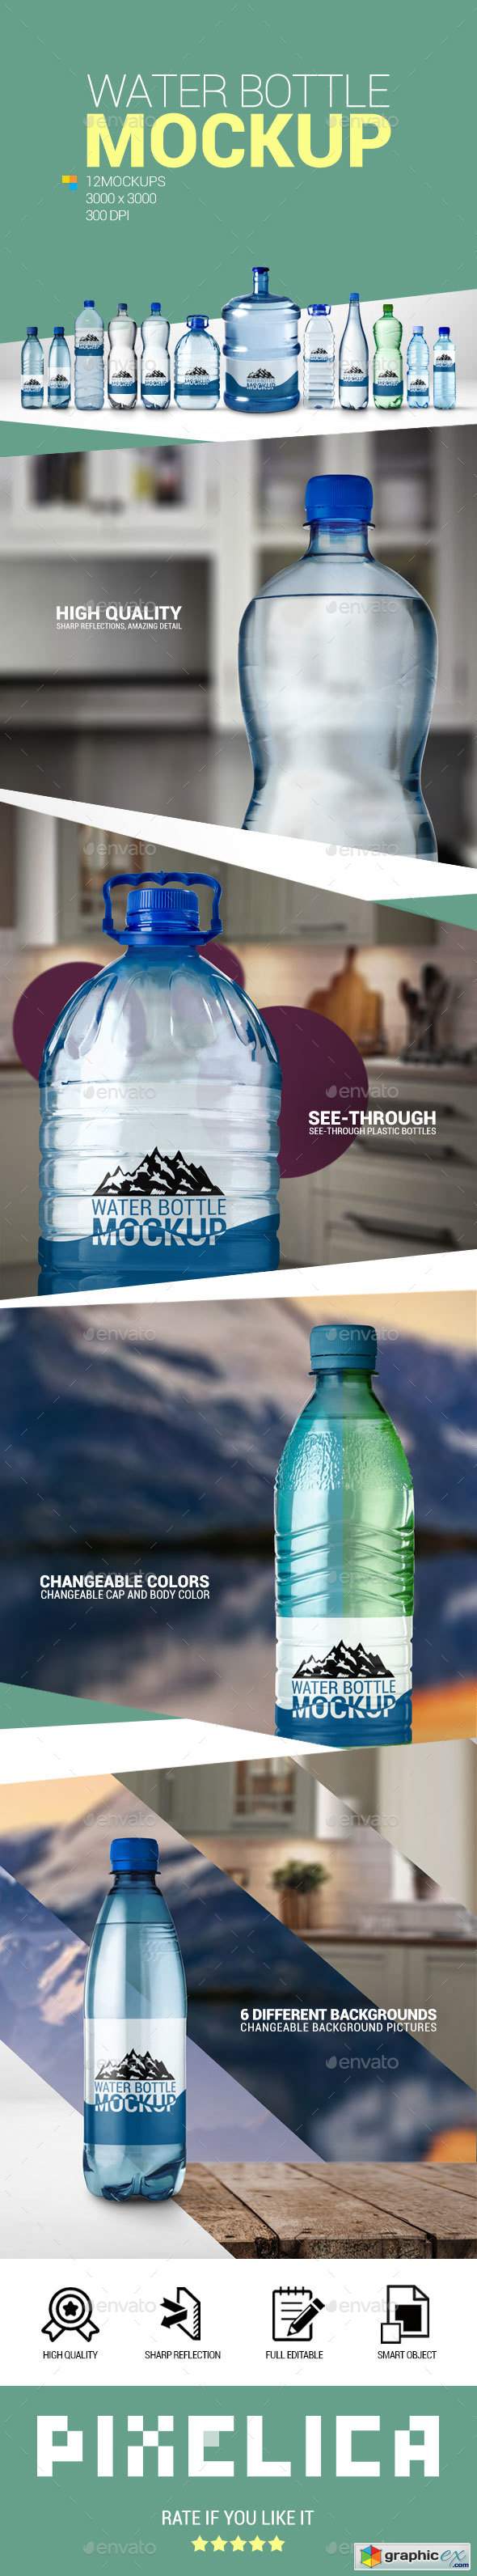 Water Bottle Mockup Pack 2